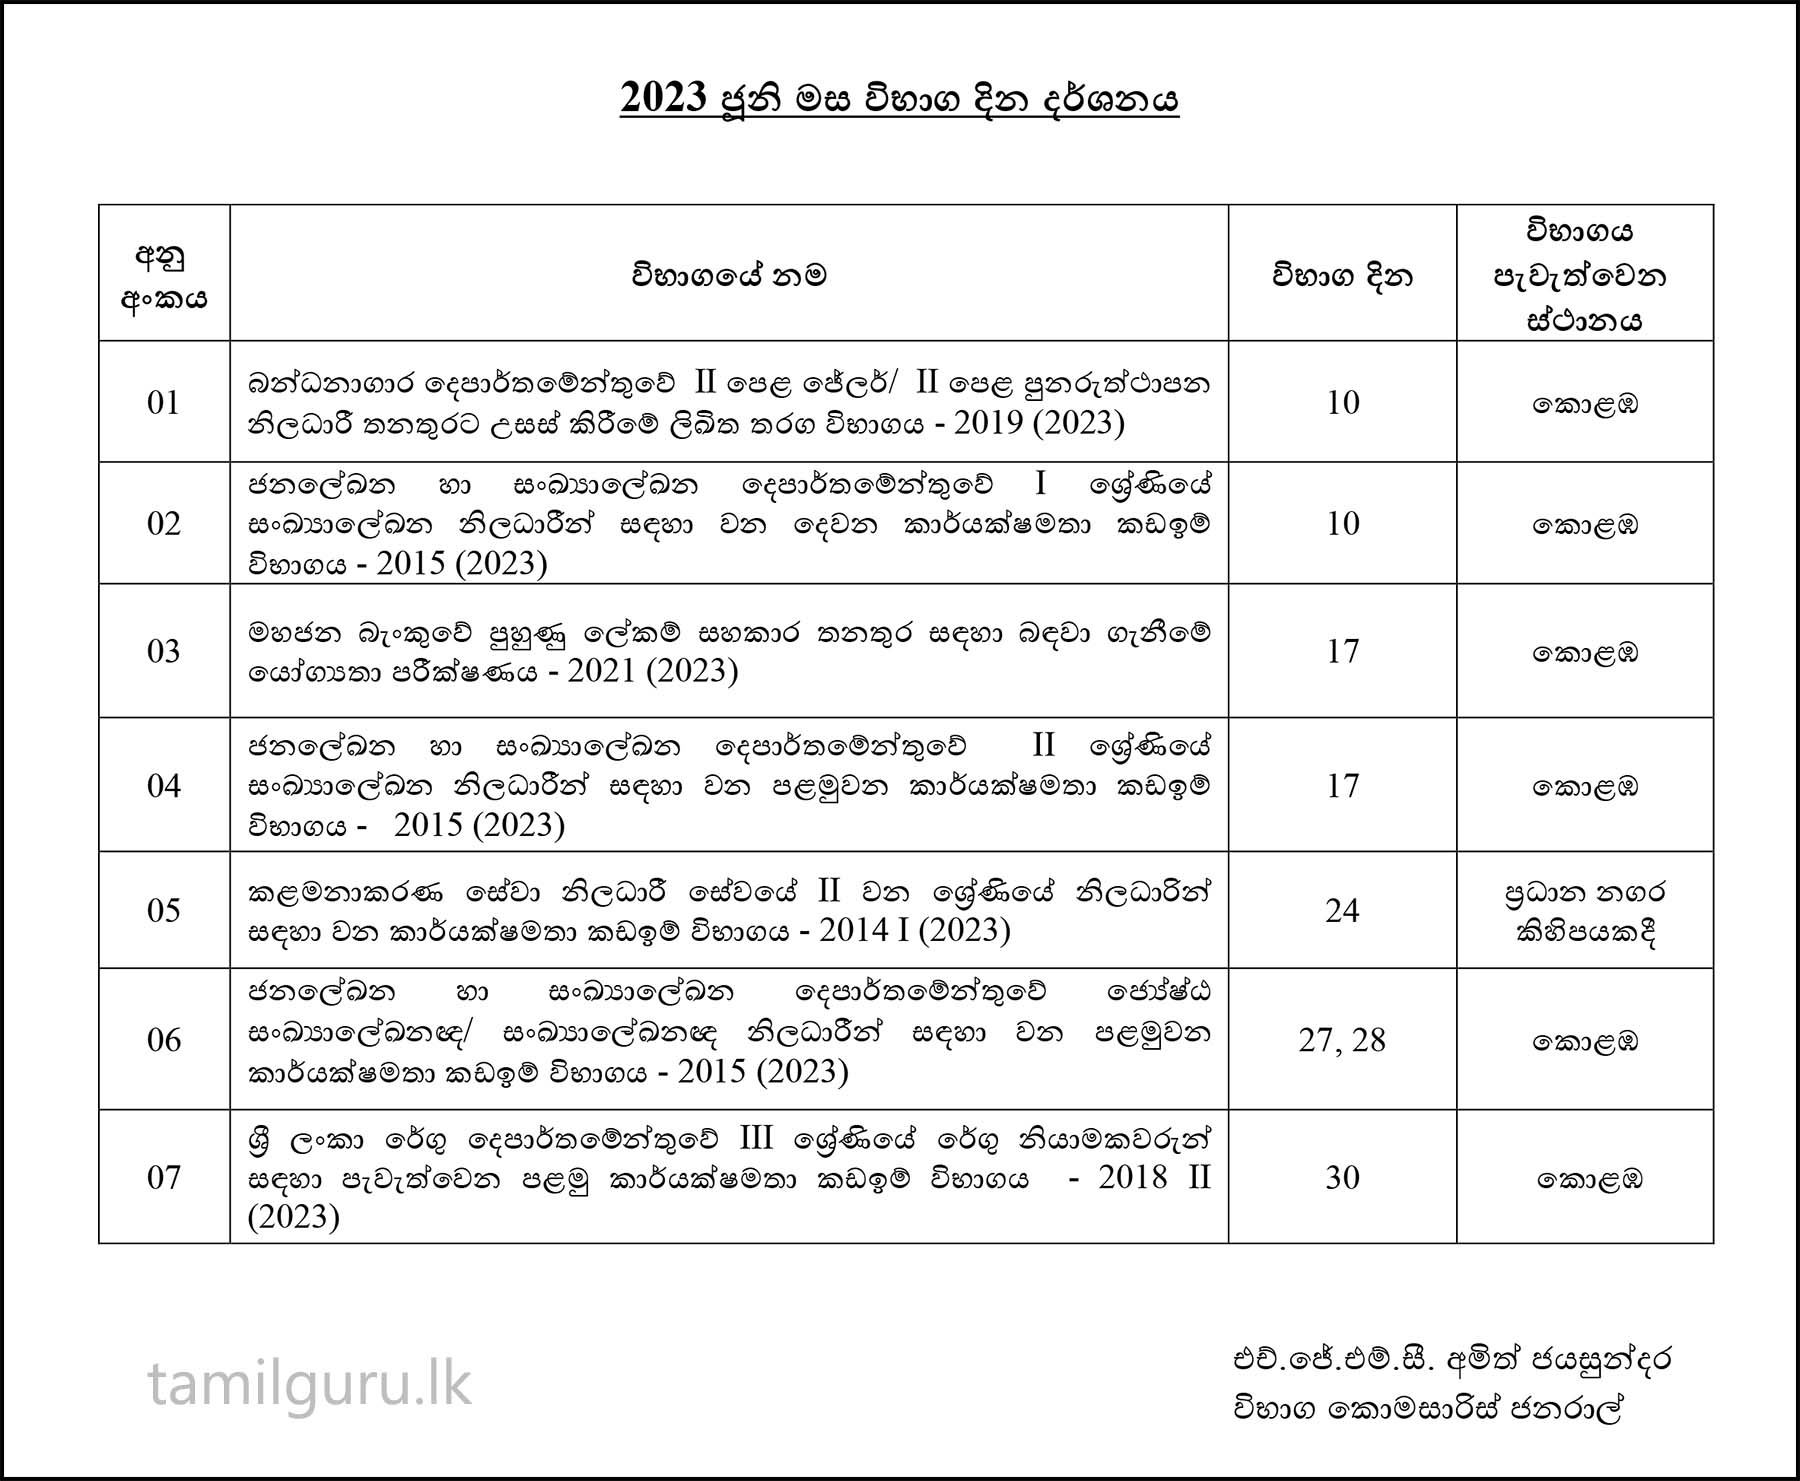 Examination Calendar for June 2023 - Department of Examinations